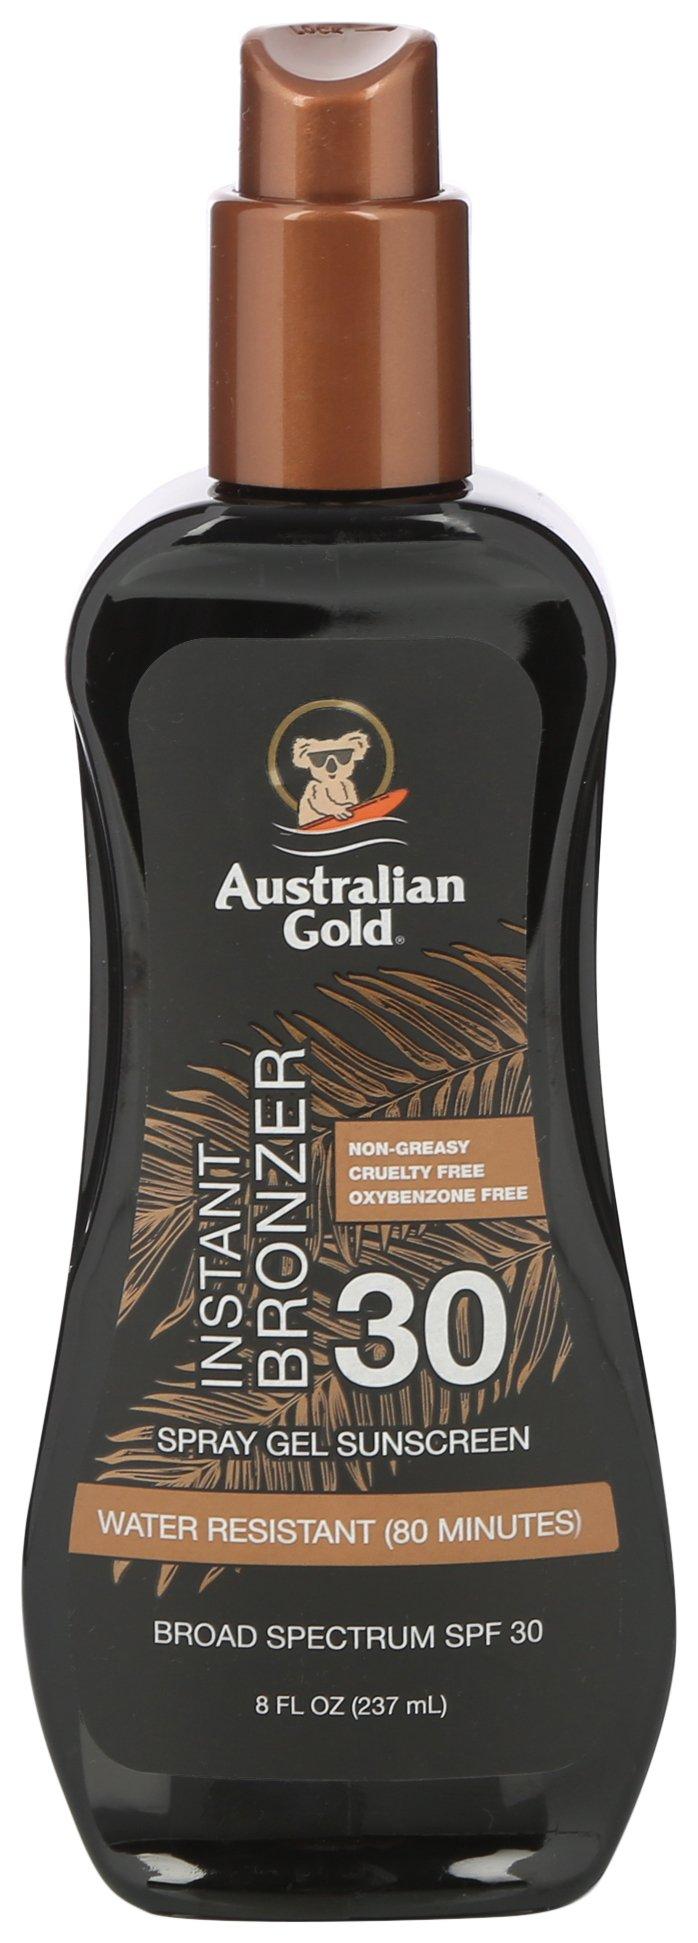 AUSTRALIAN GOLD SPF 30 Instant Bronzer Sunscreen